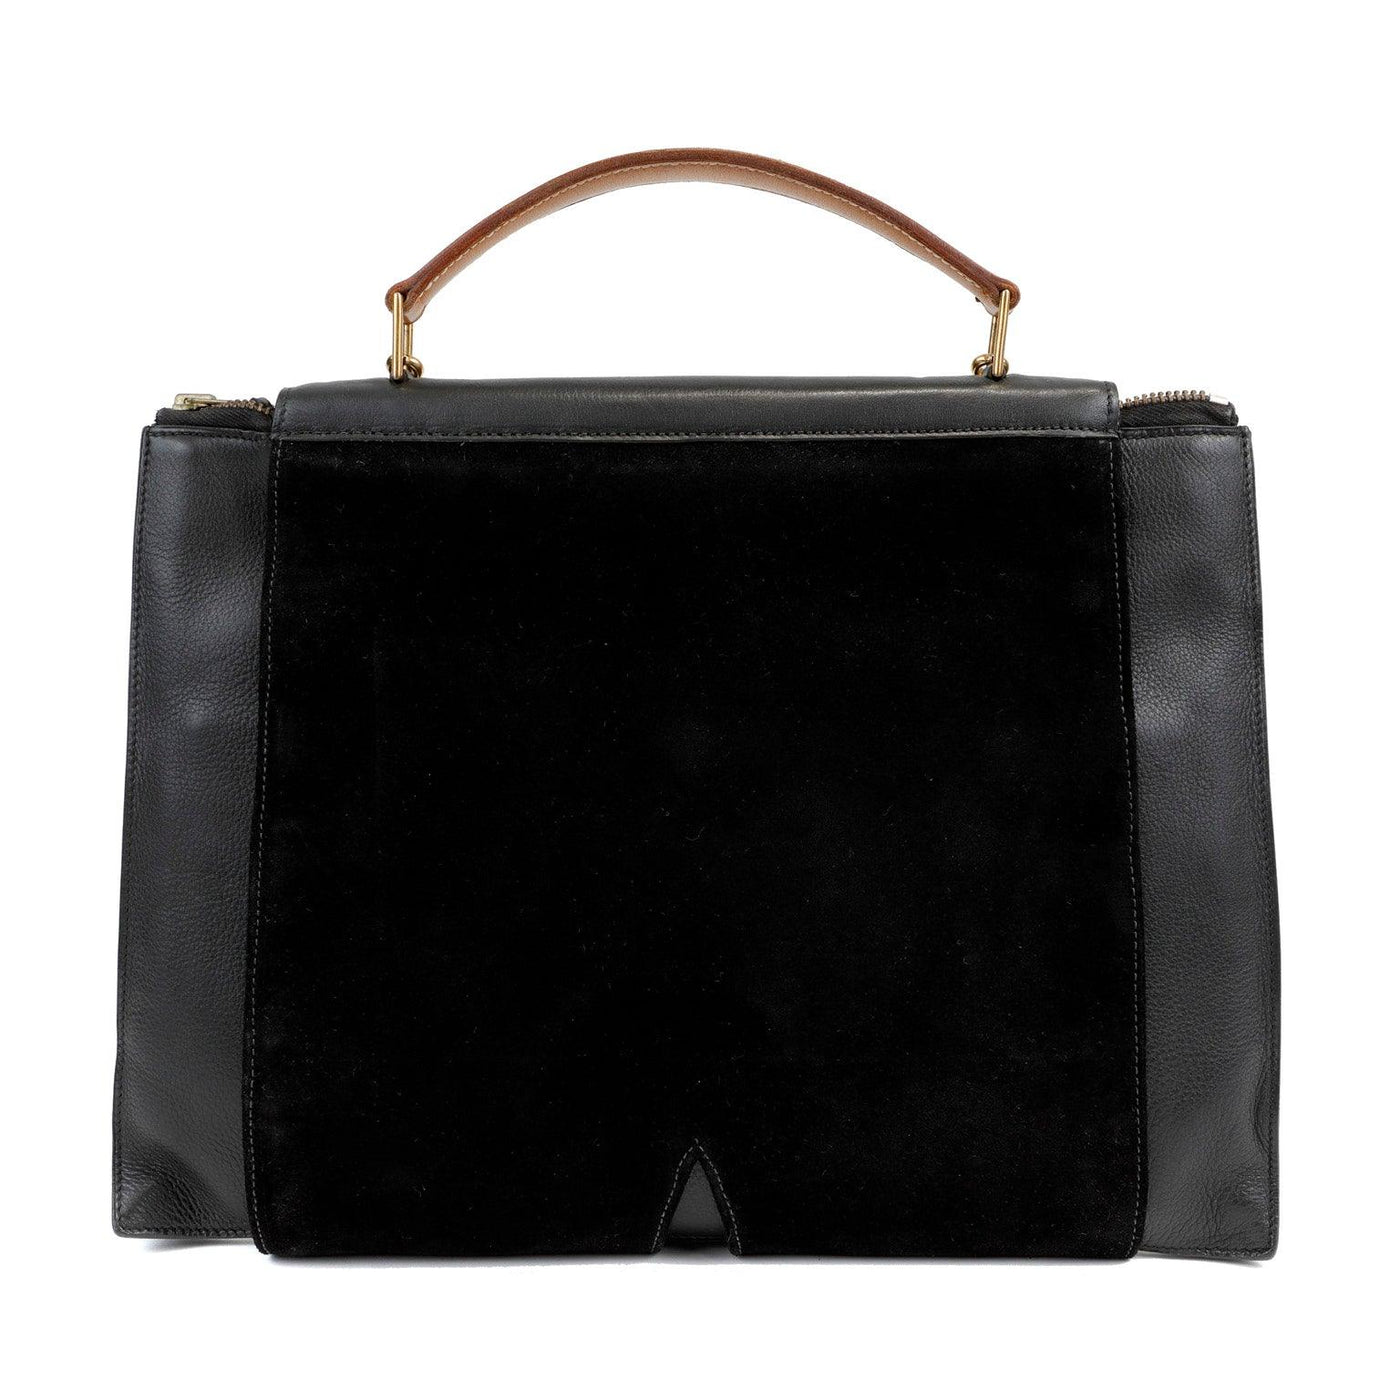 Hermès Black Leather and Lizard Portfolio Case - Only Authentics